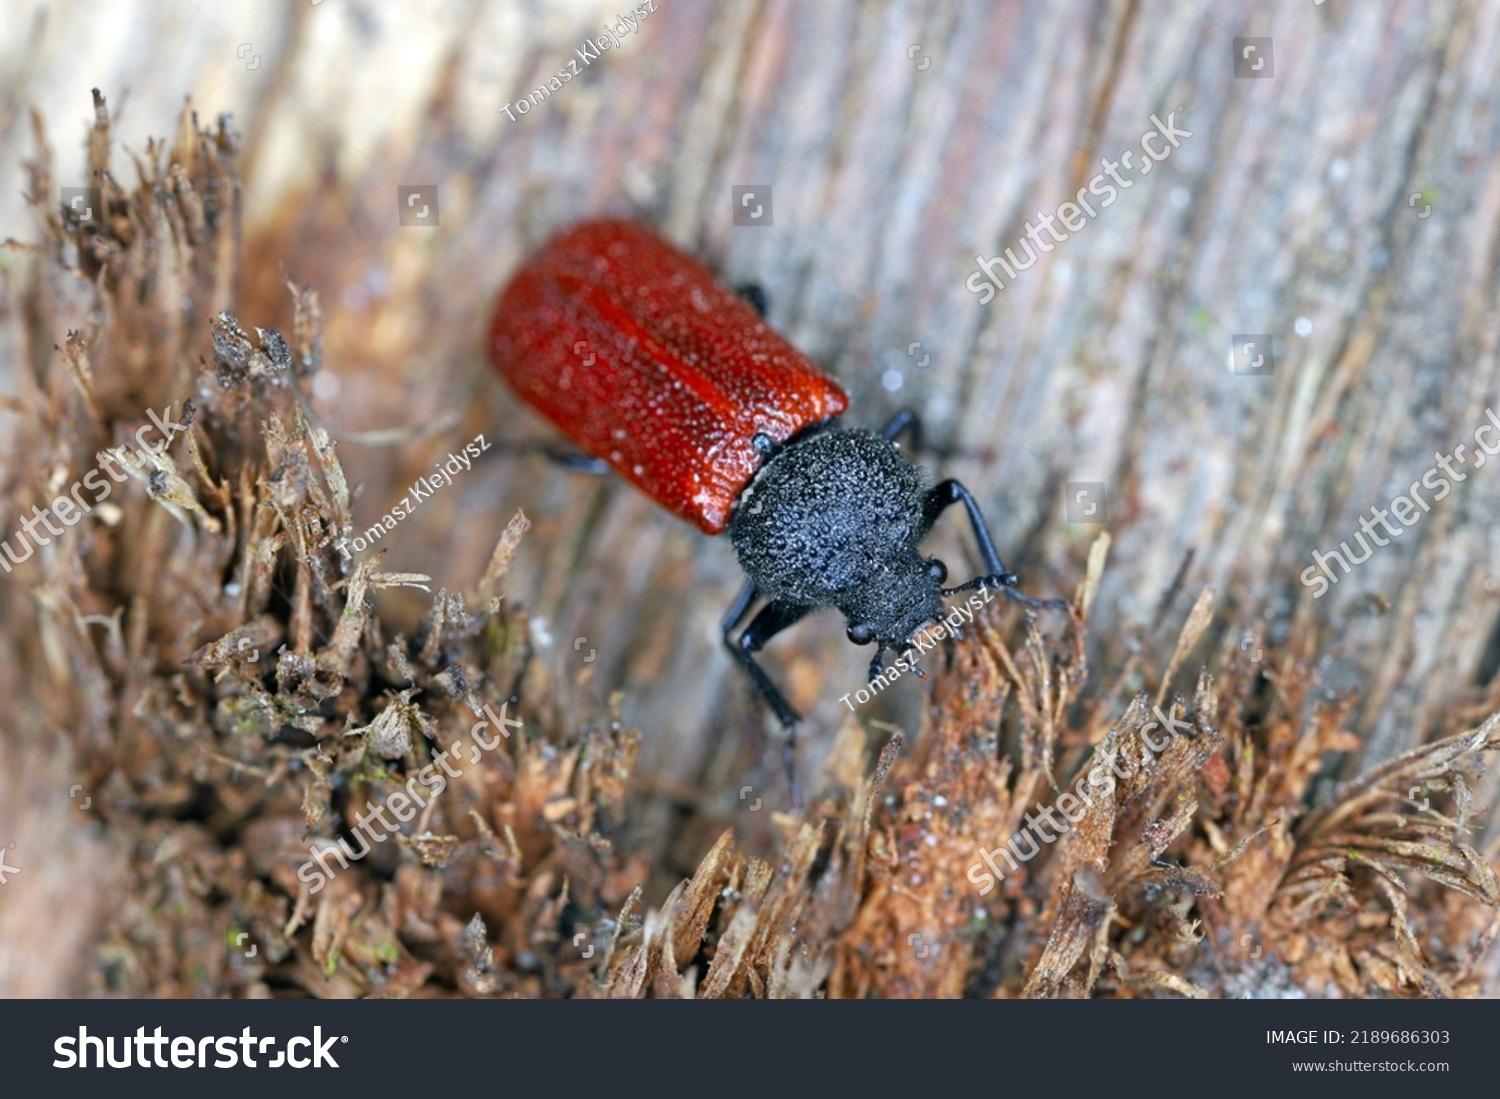 17 Capuchin beetle Images, Stock Photos & Vectors | Shutterstock